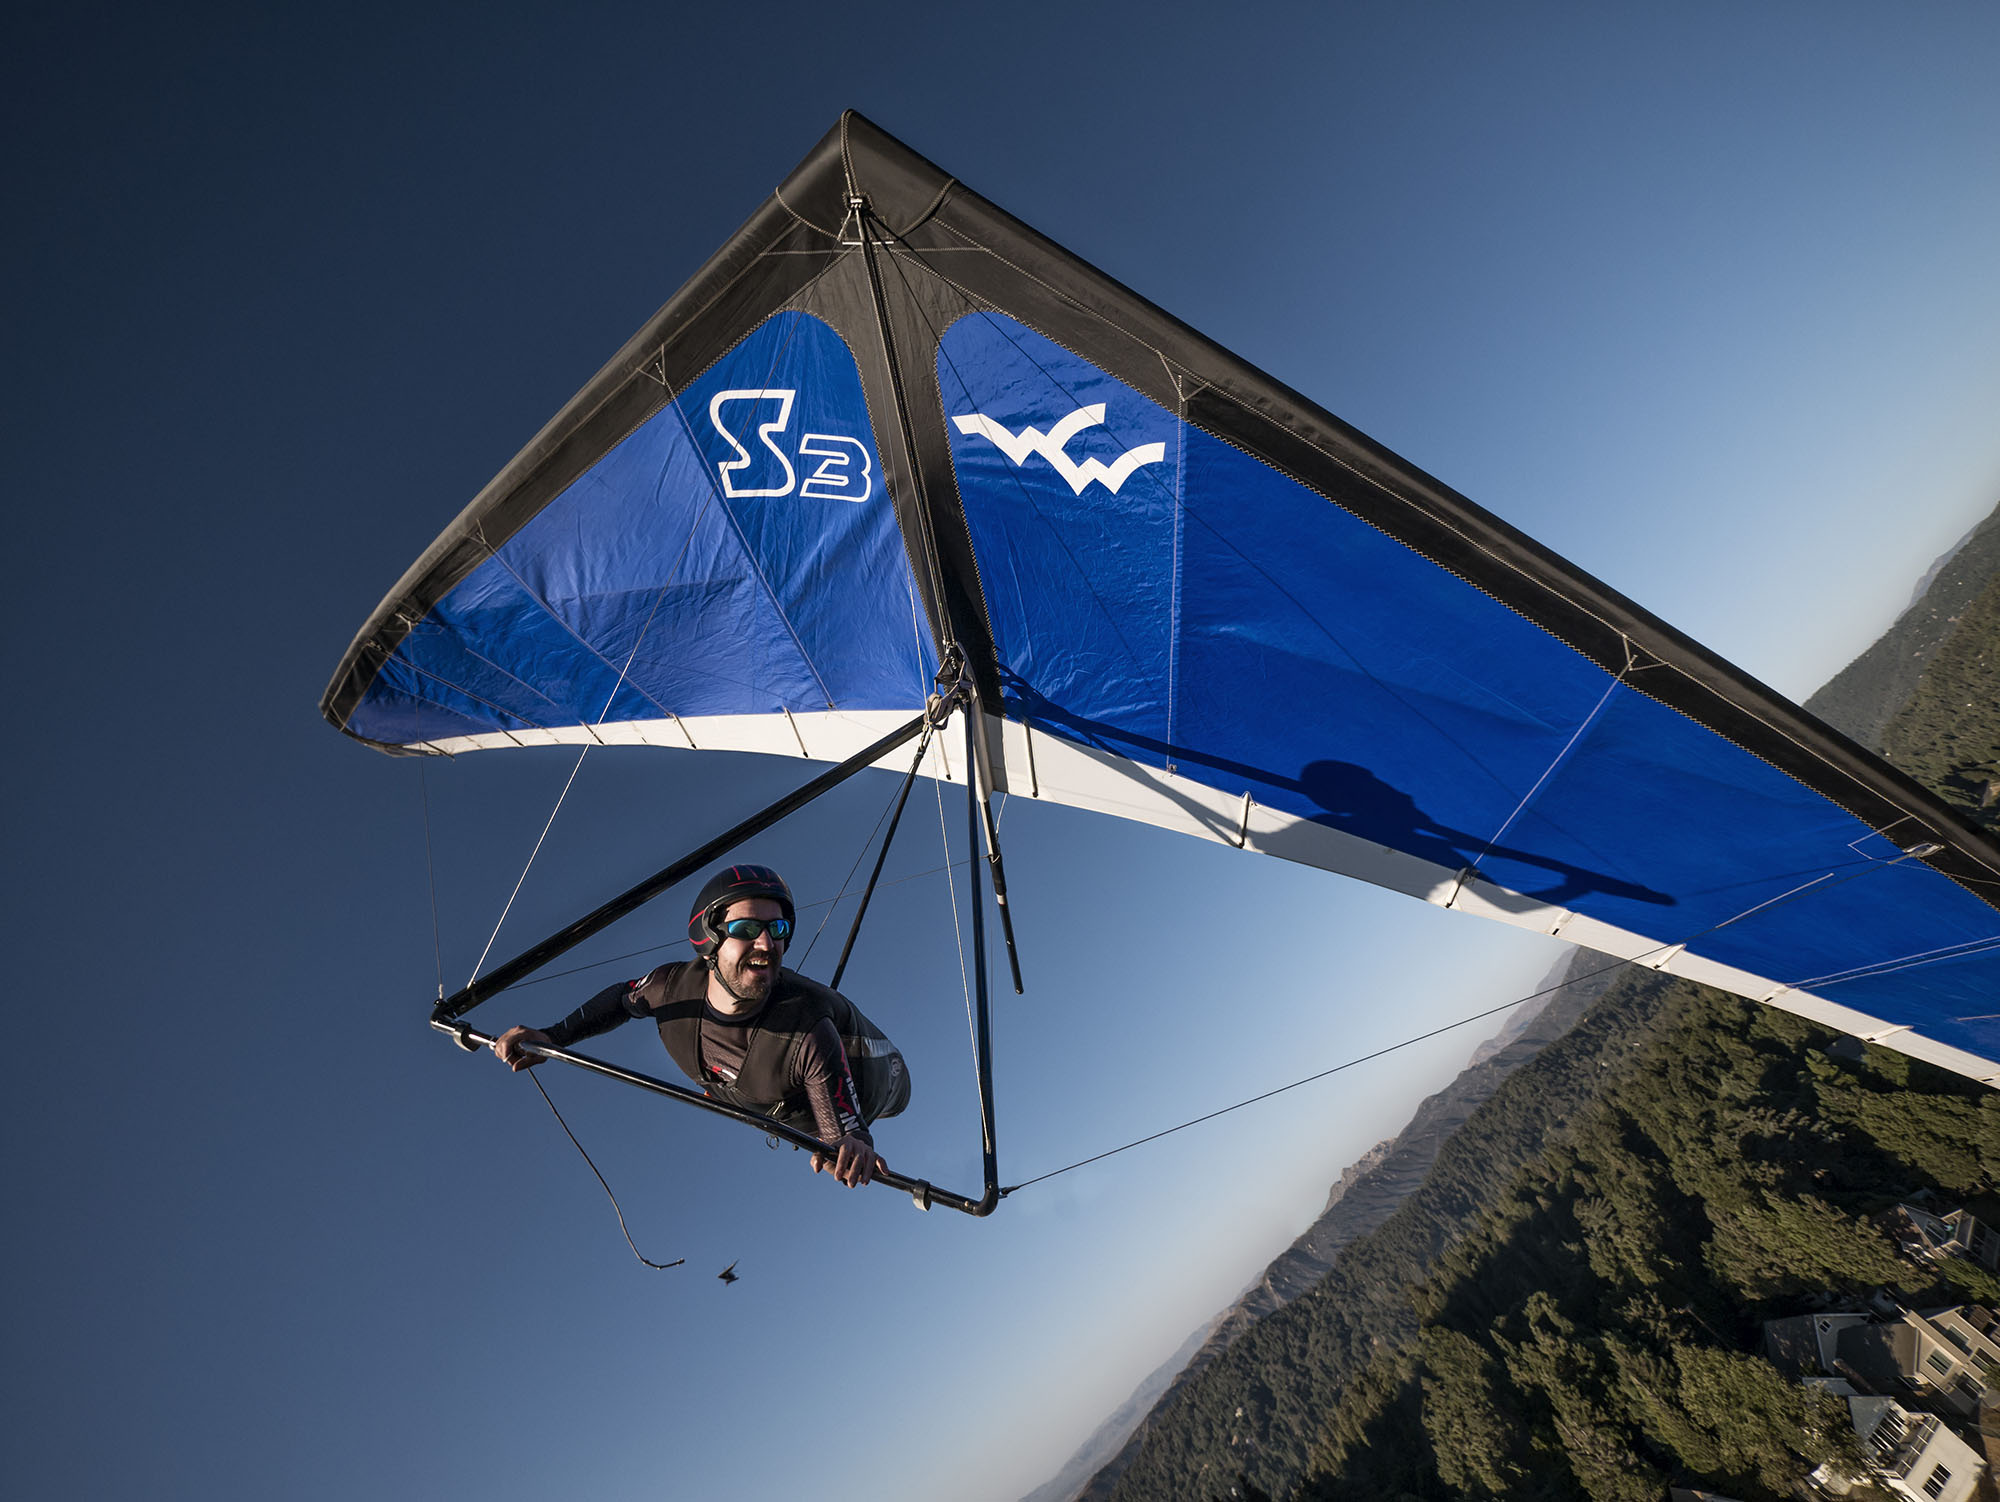 Hang Gliding: Dave Aldrich, Hang glider pilot, Engineer, Southern California. 2000x1510 HD Wallpaper.